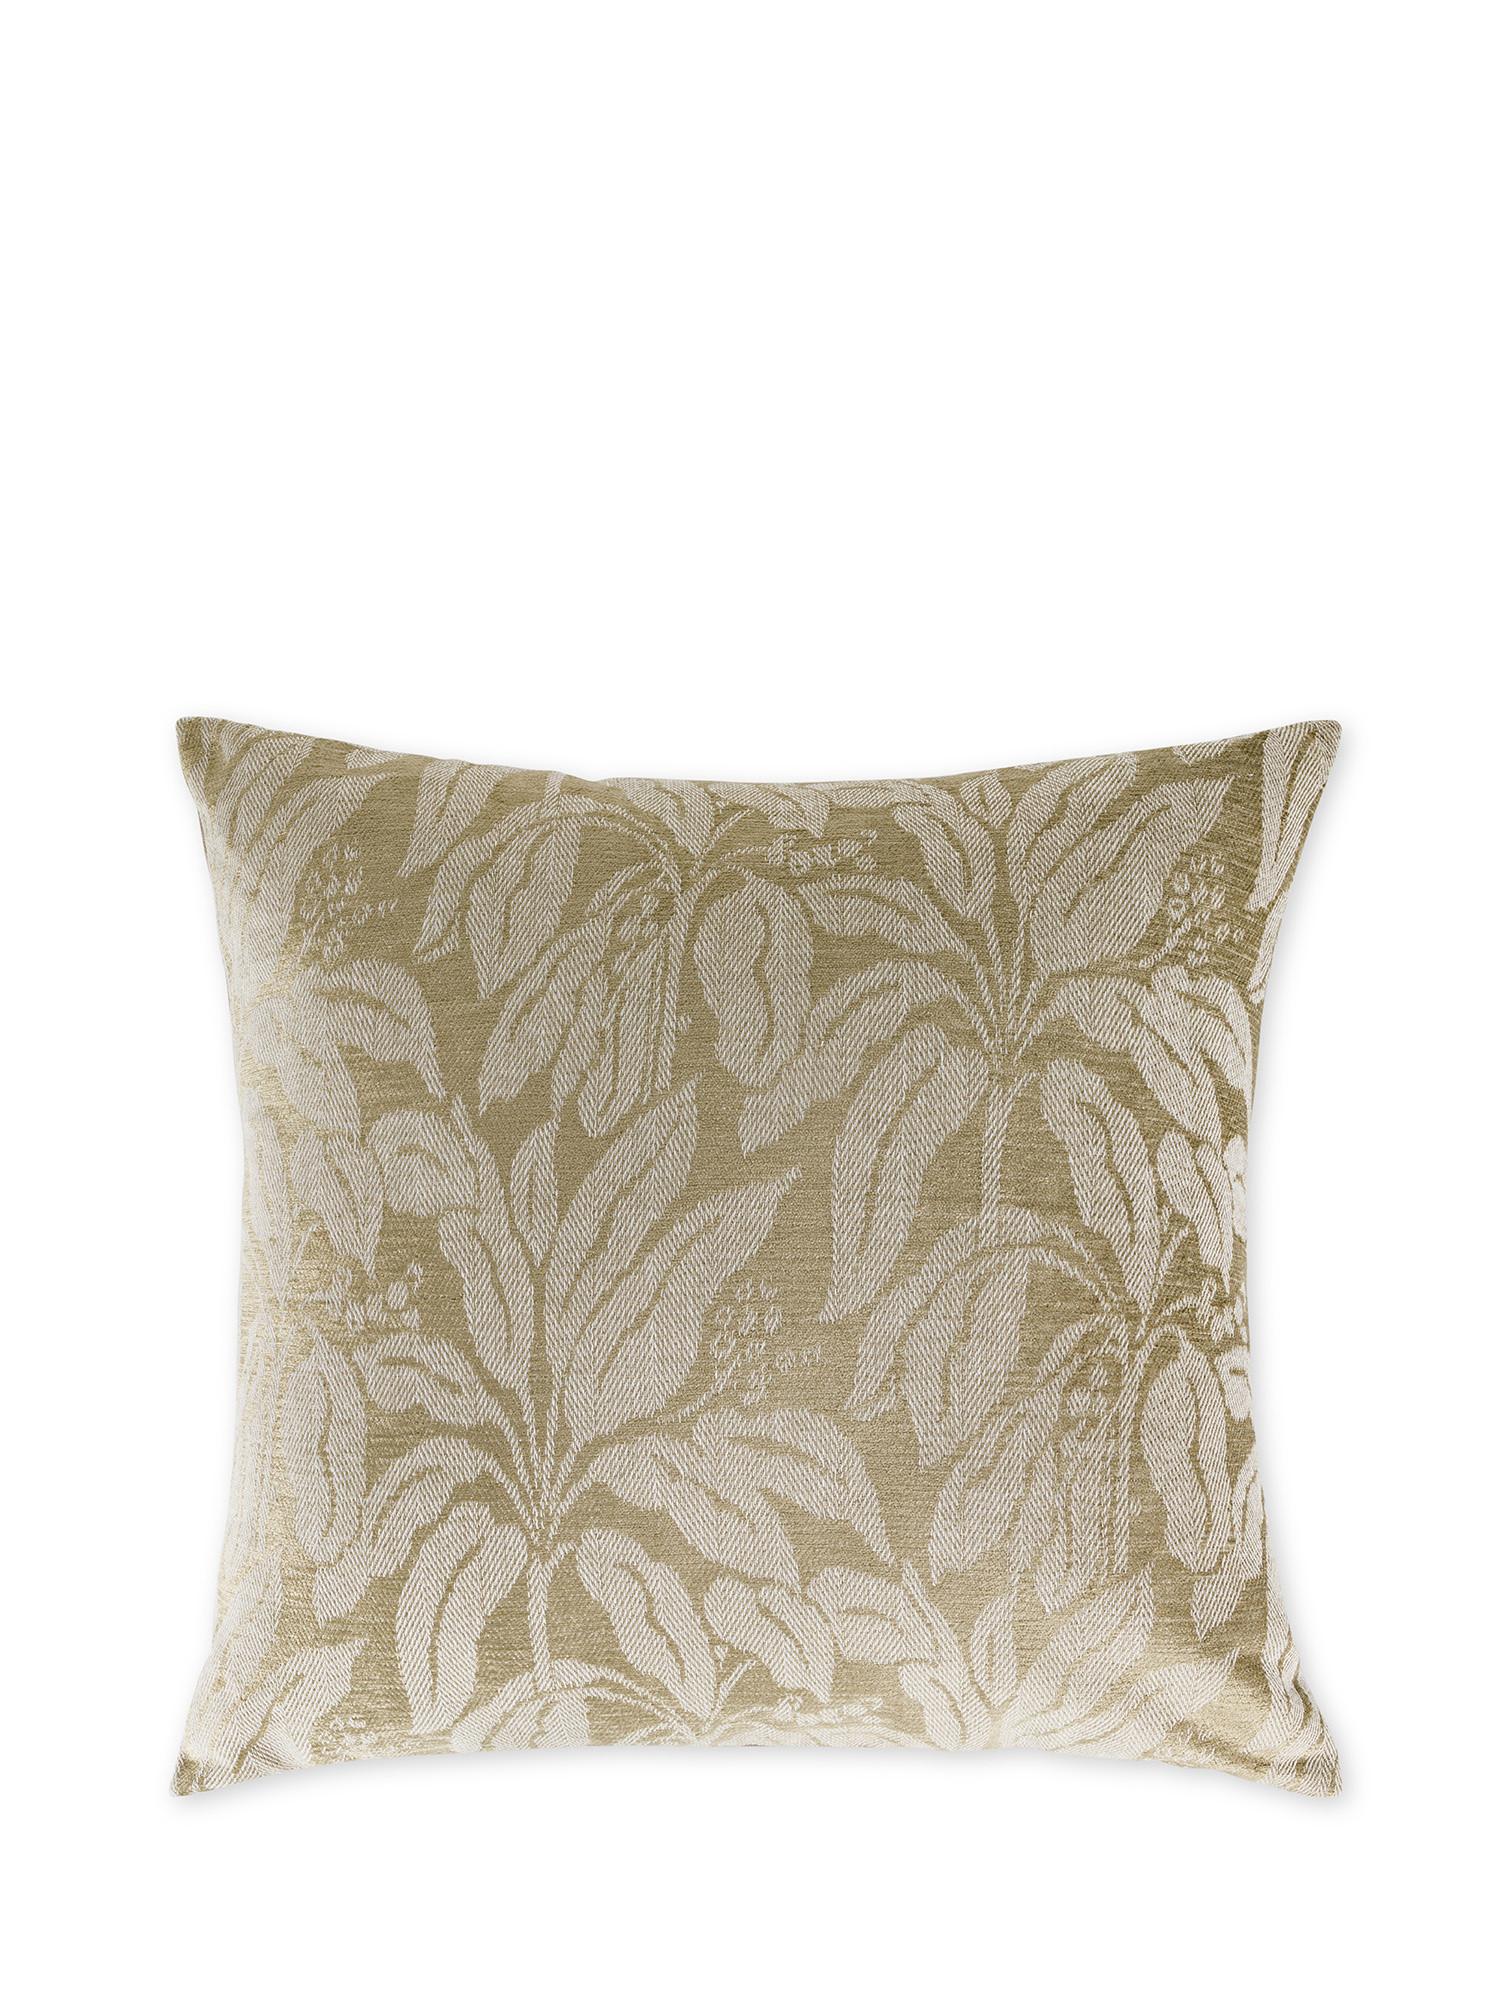 Cotton jacquard cushion with palm motif 50x50cm, Beige, large image number 0